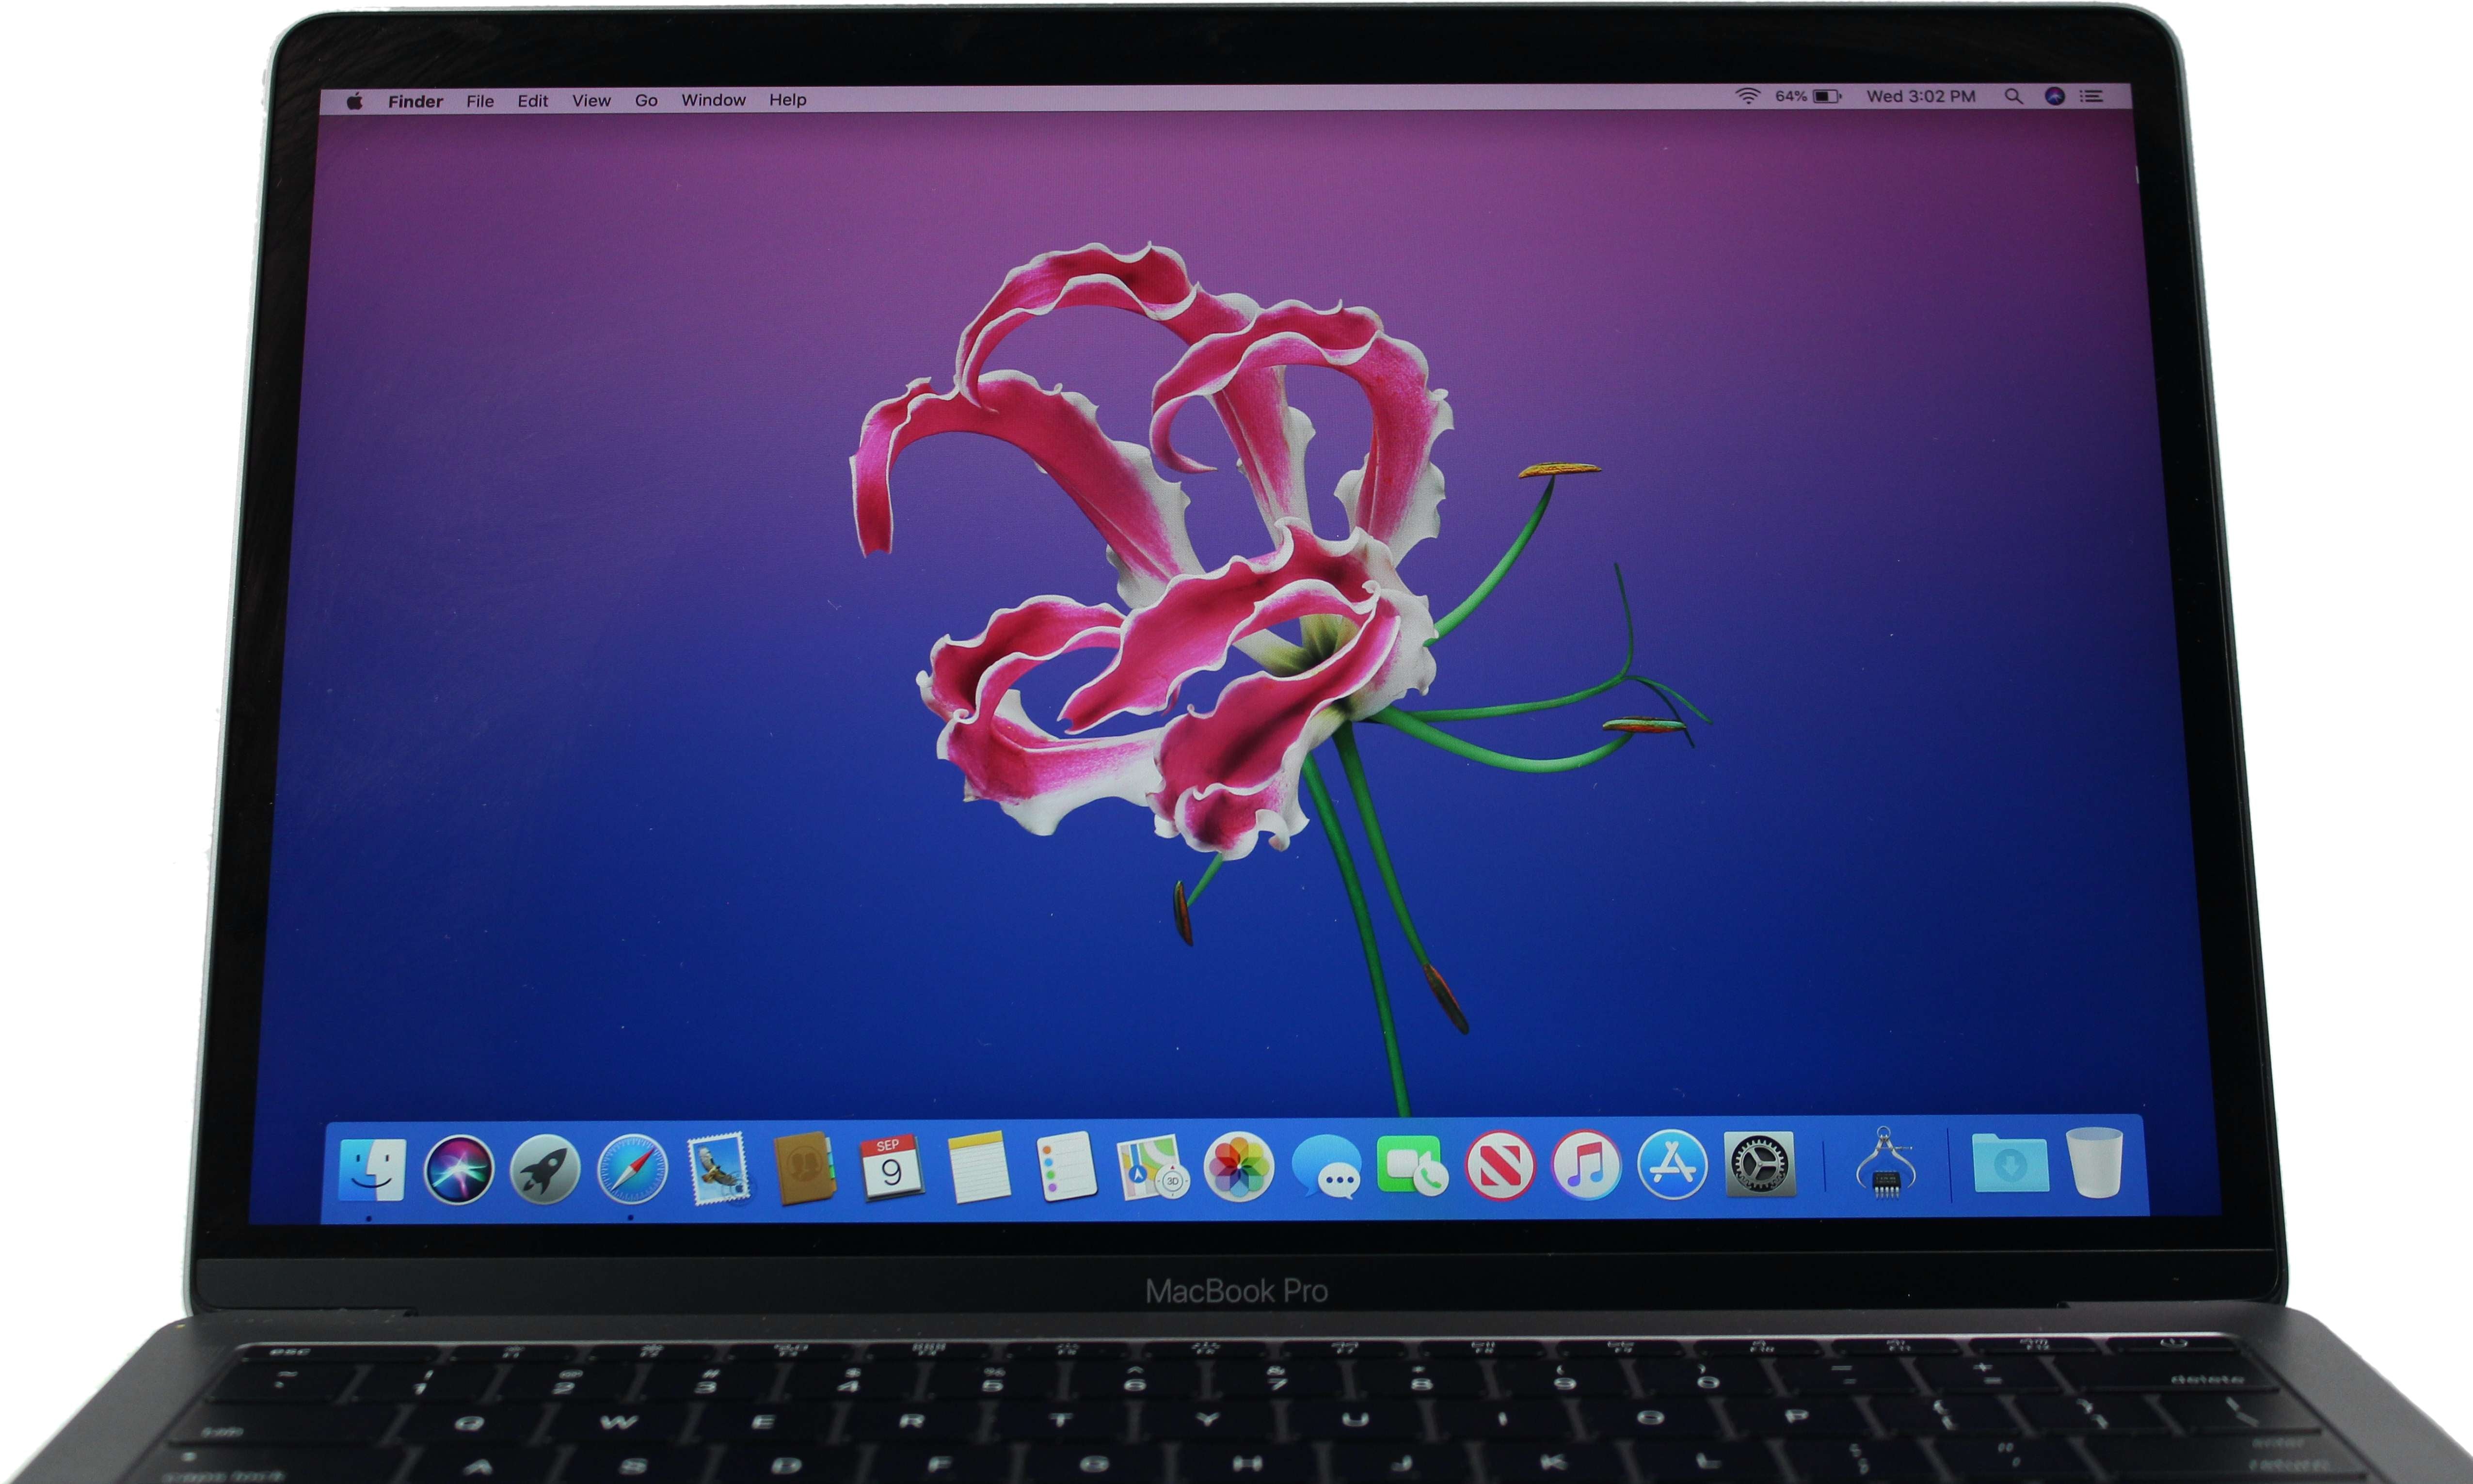  Apple MacBook Pro 13-inch 2.3GHz Core i5, 256GB